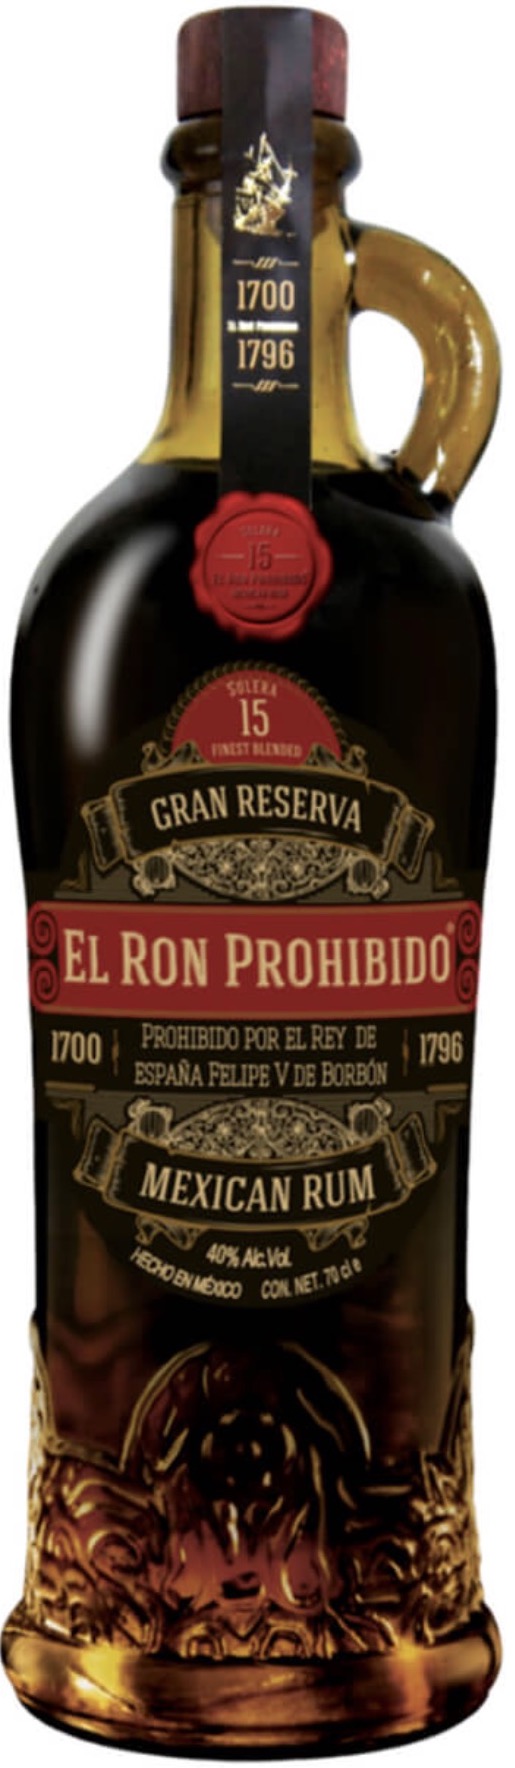 El Ron Prohibido Solera 15 Jahre Gran Reserva Mexican Rum 40 % 0,7 l